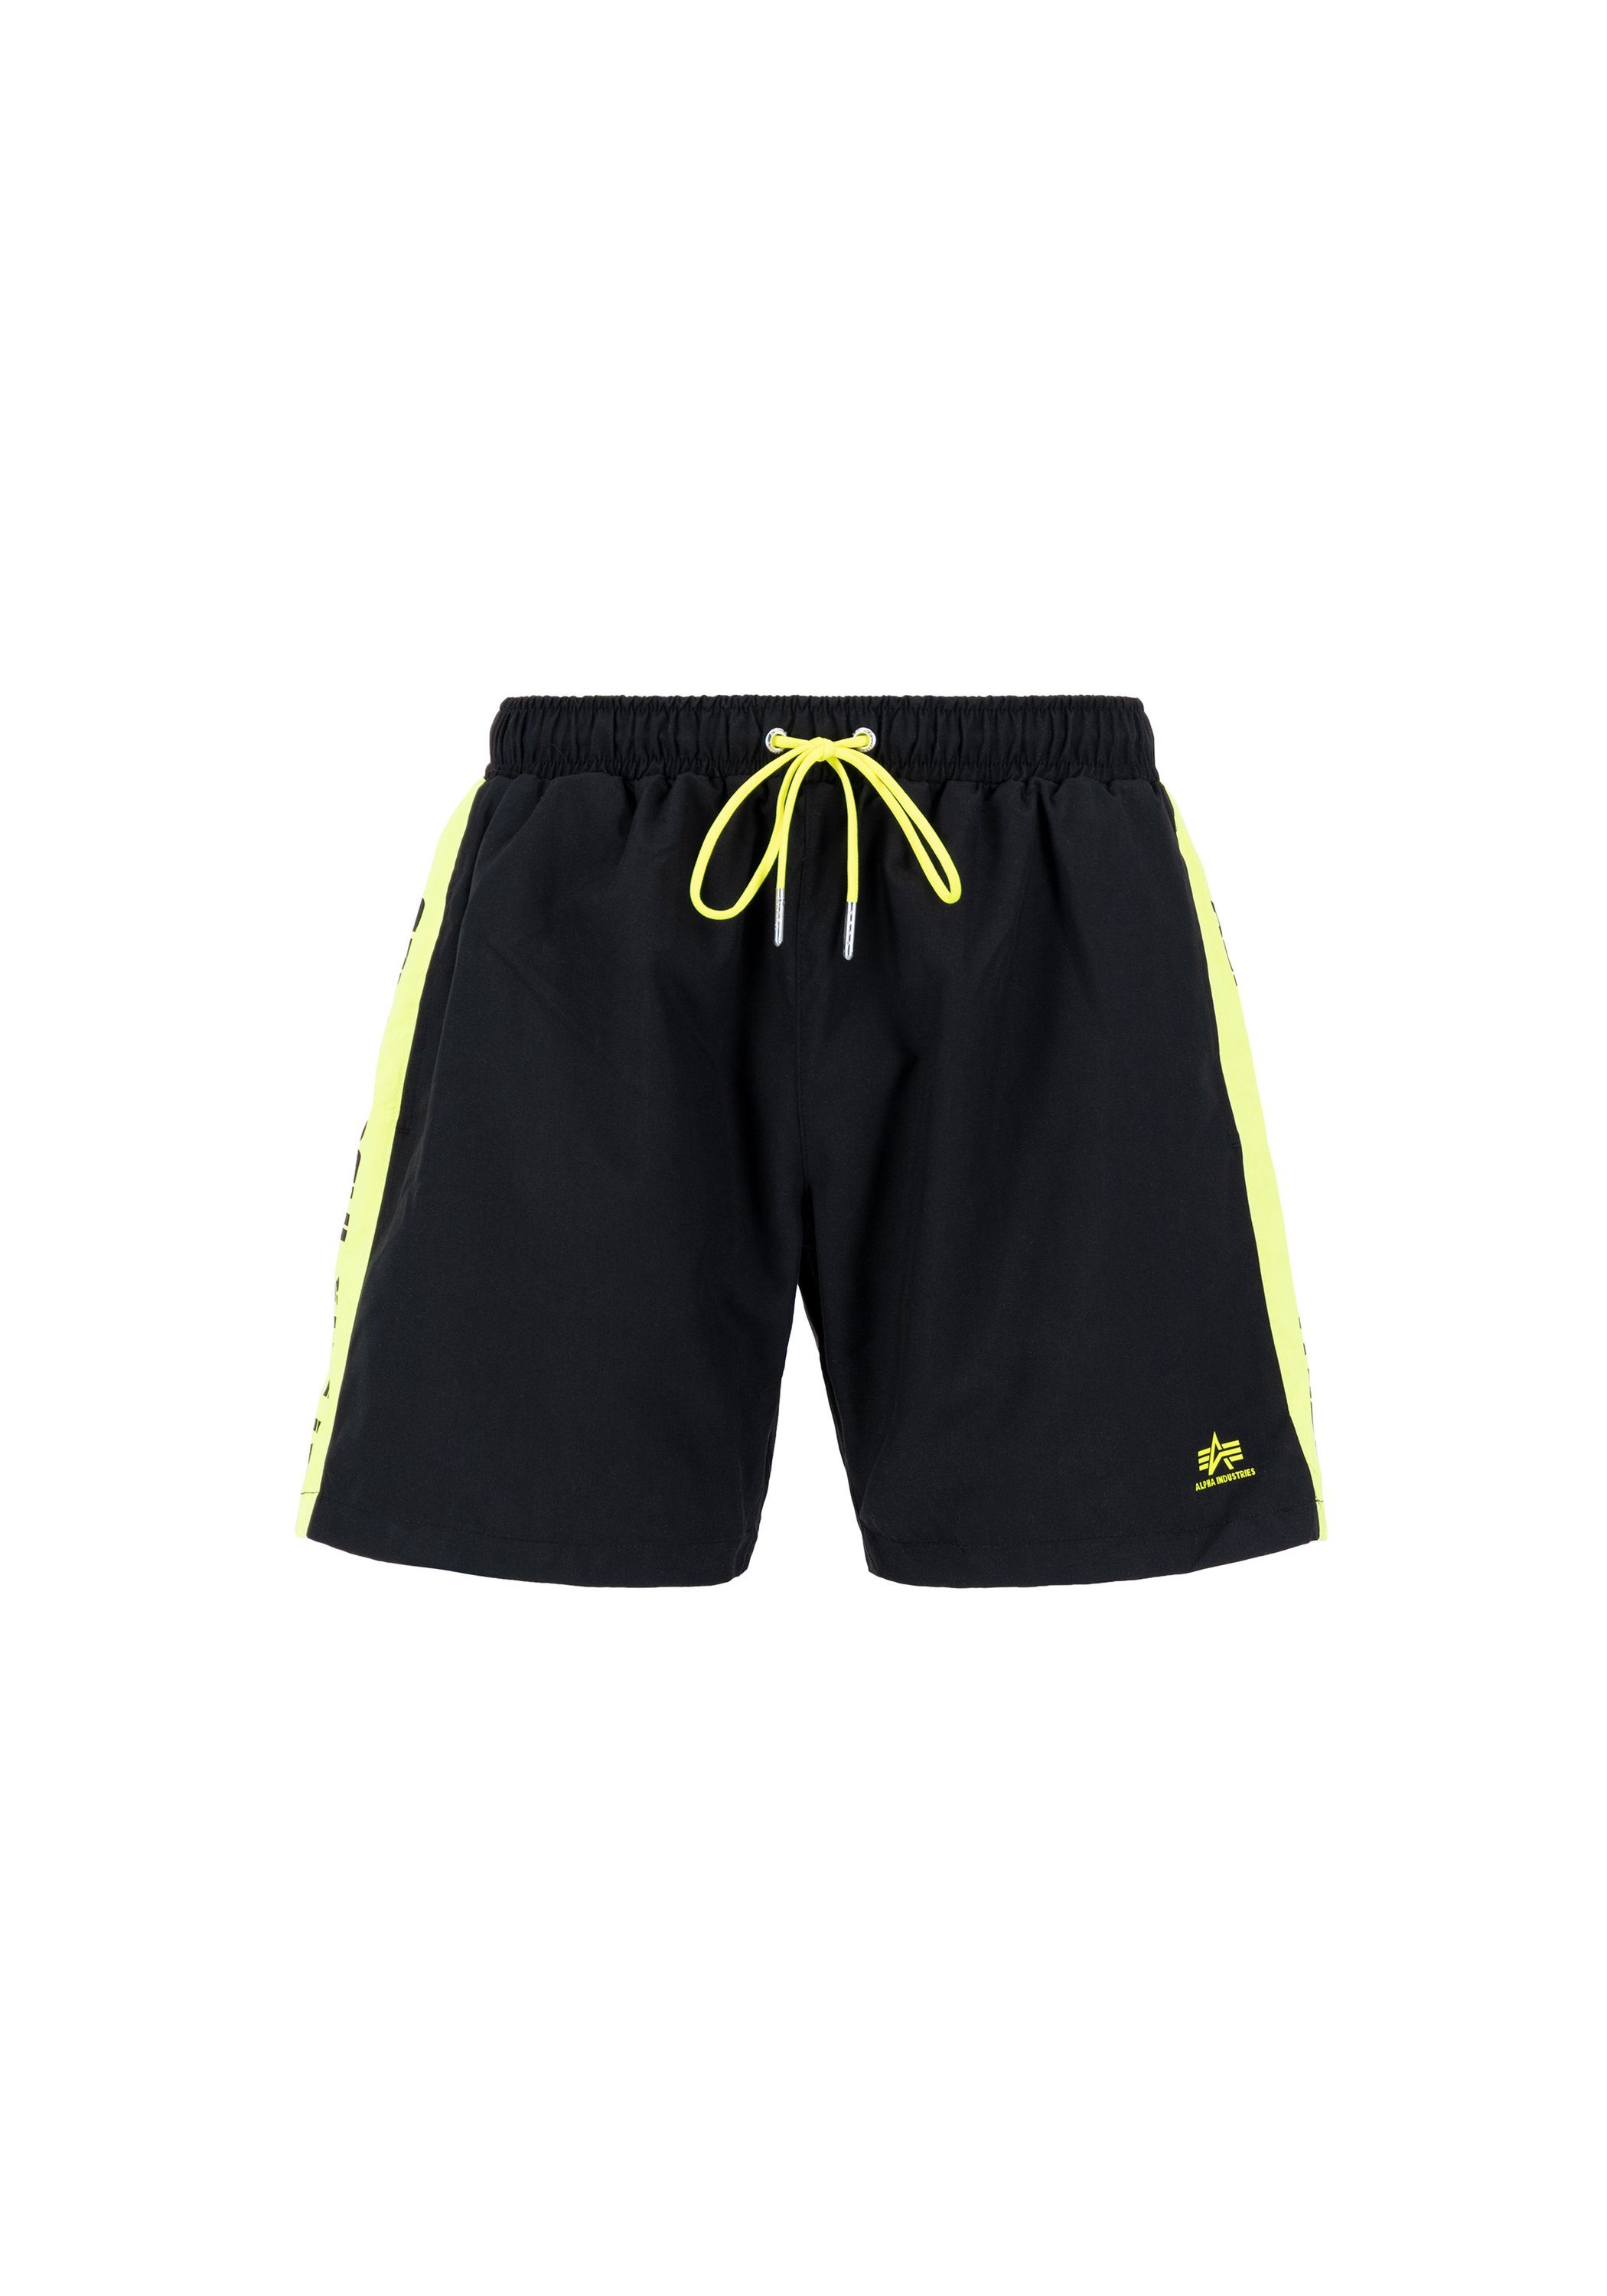 Beachwear Industries Stripe - Industries Swim Short Alpha Alpha Shorts Men Printed